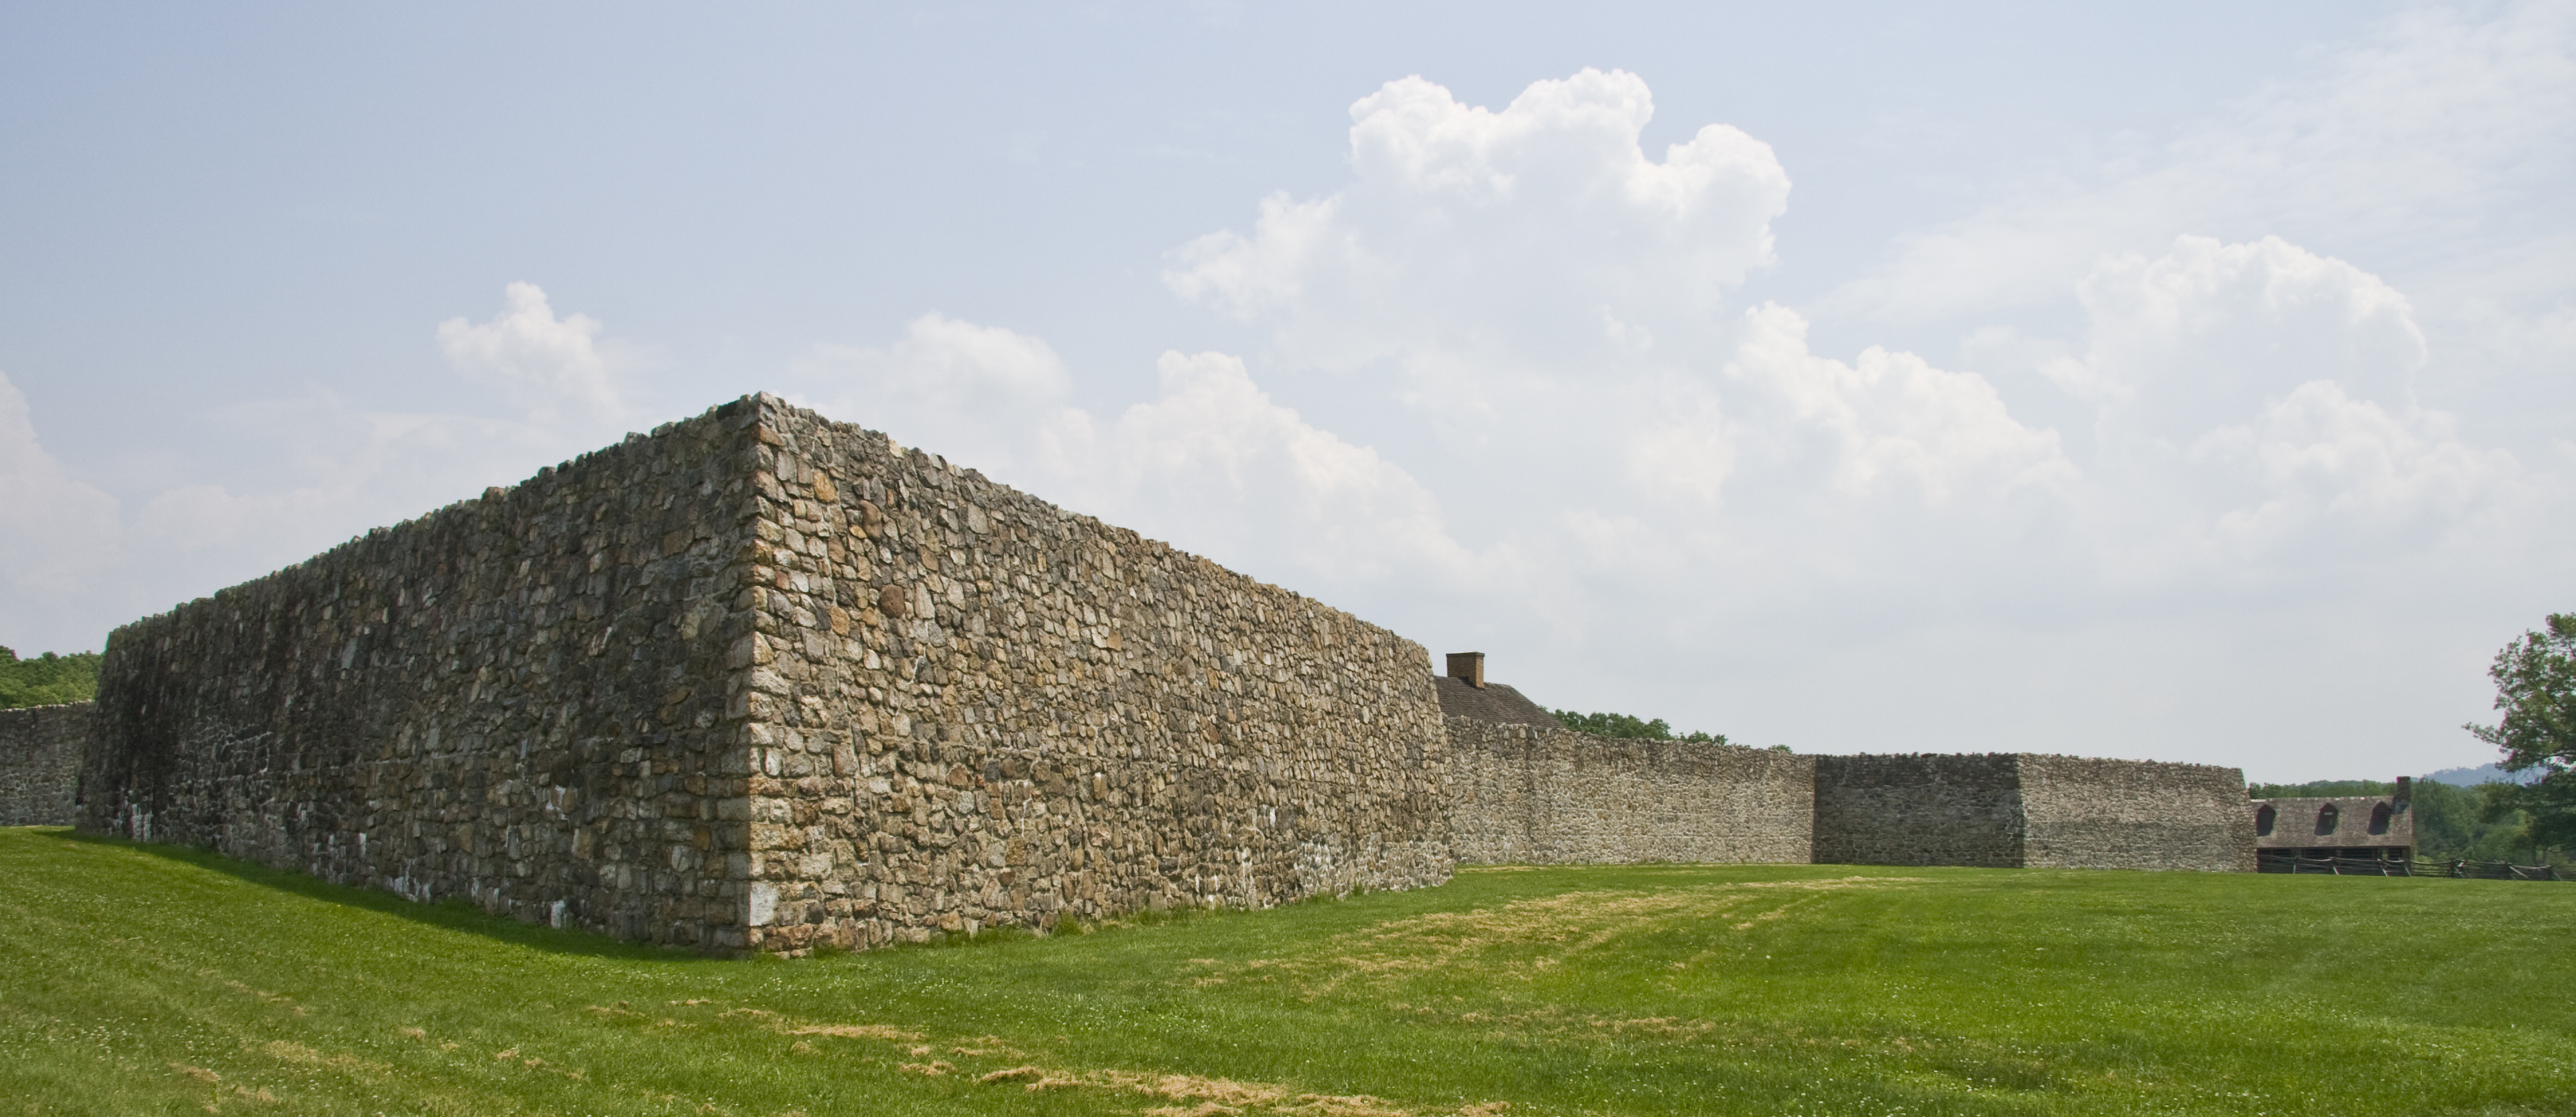 File:Fort Frederick walls.jpg - Wikimedia Commons